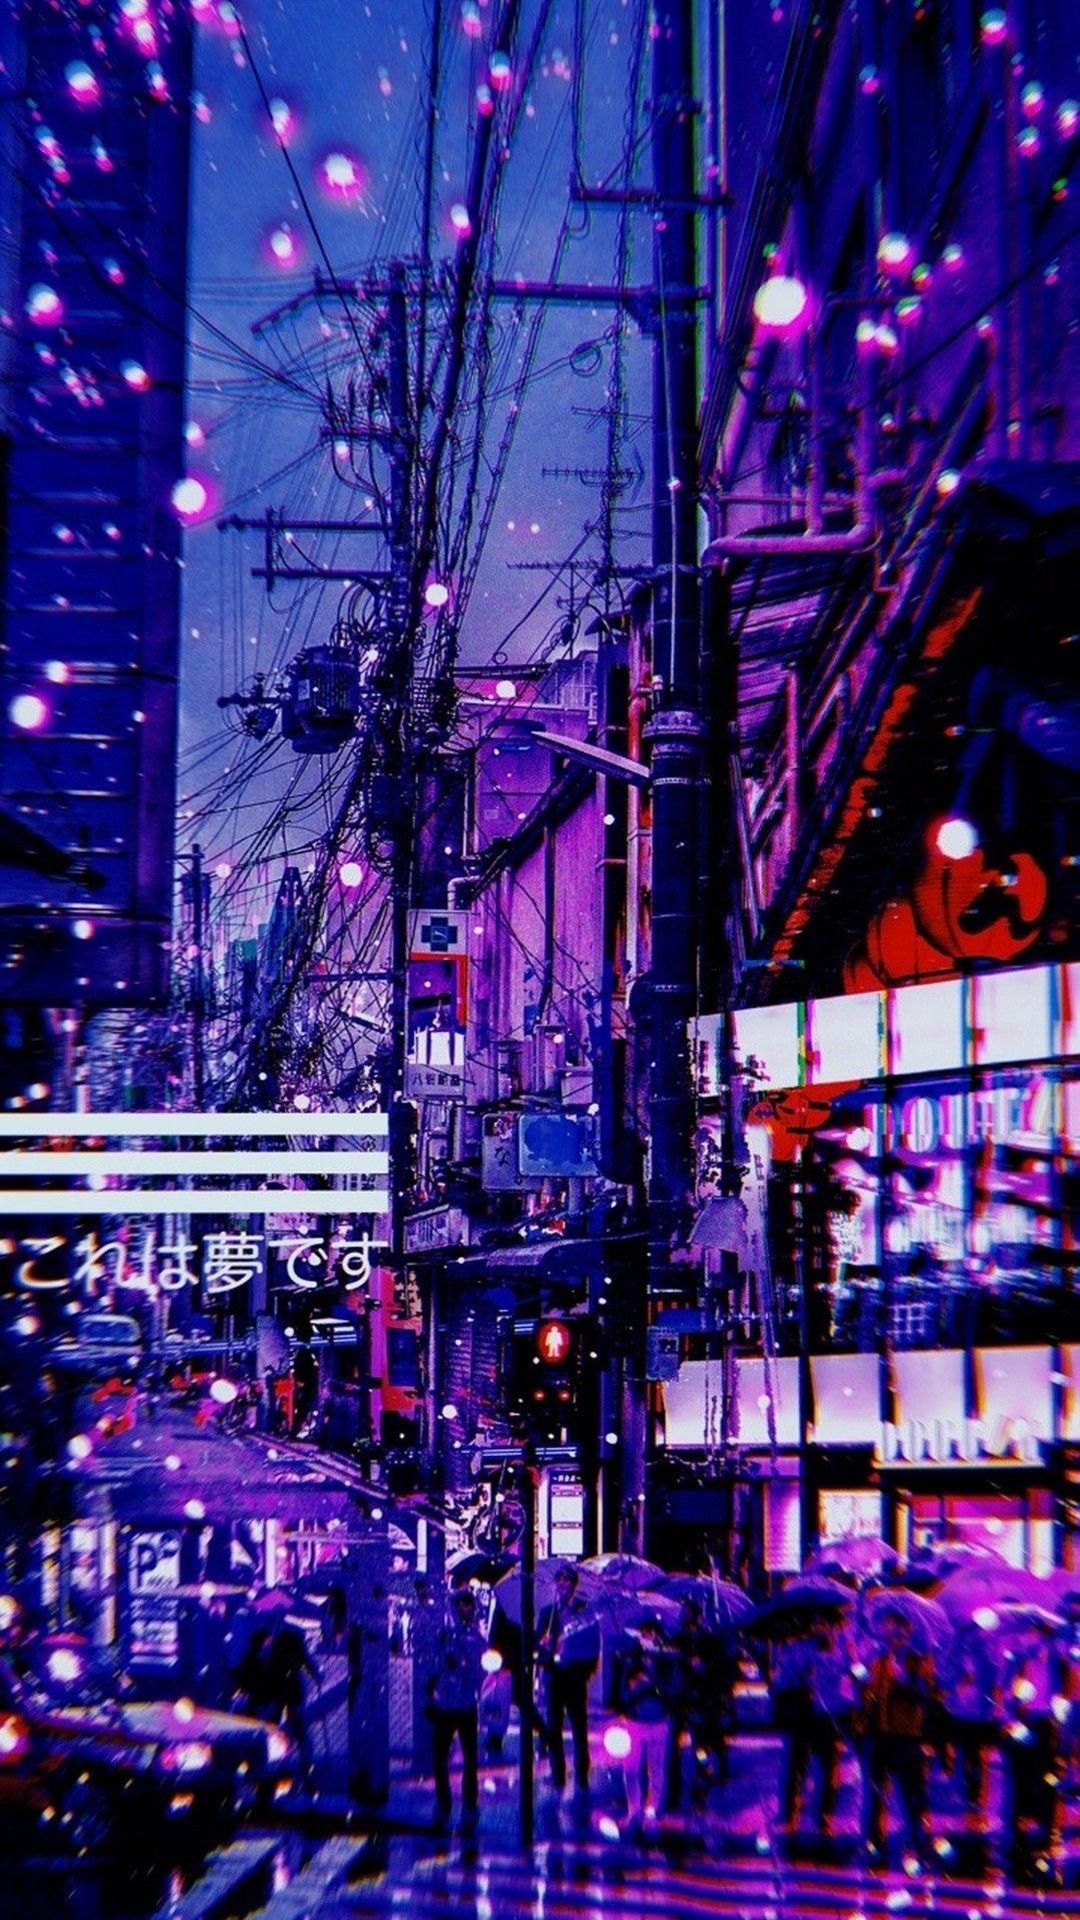 A purple city street with people walking around - Japanese, Cyberpunk